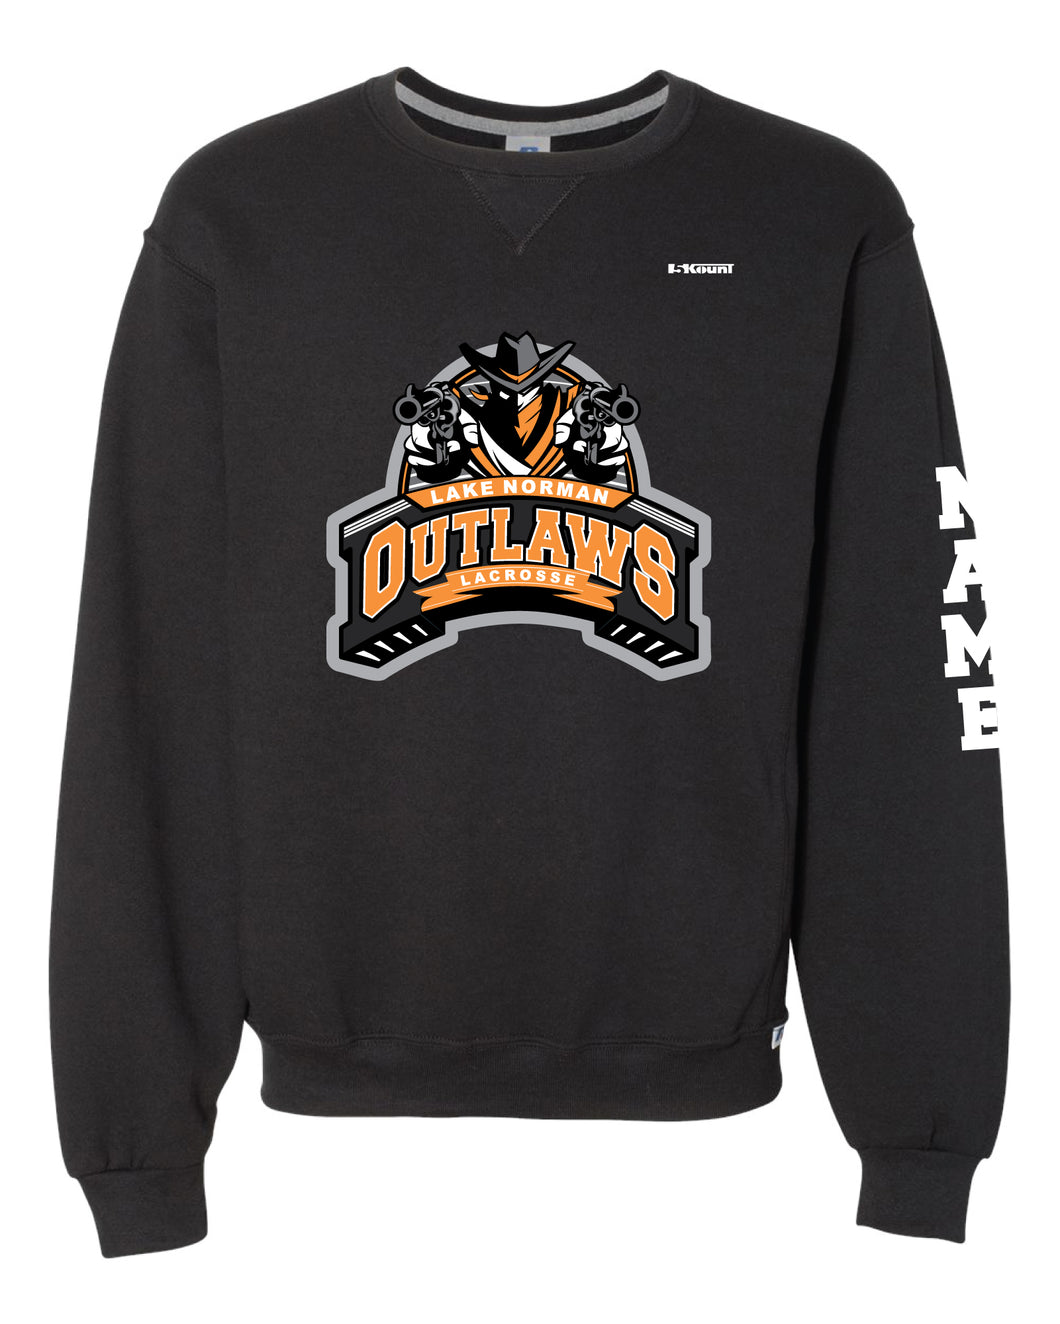 Outlaws Lax Russell Athletic Cotton Crewneck Sweatshirt - Black - 5KounT2018